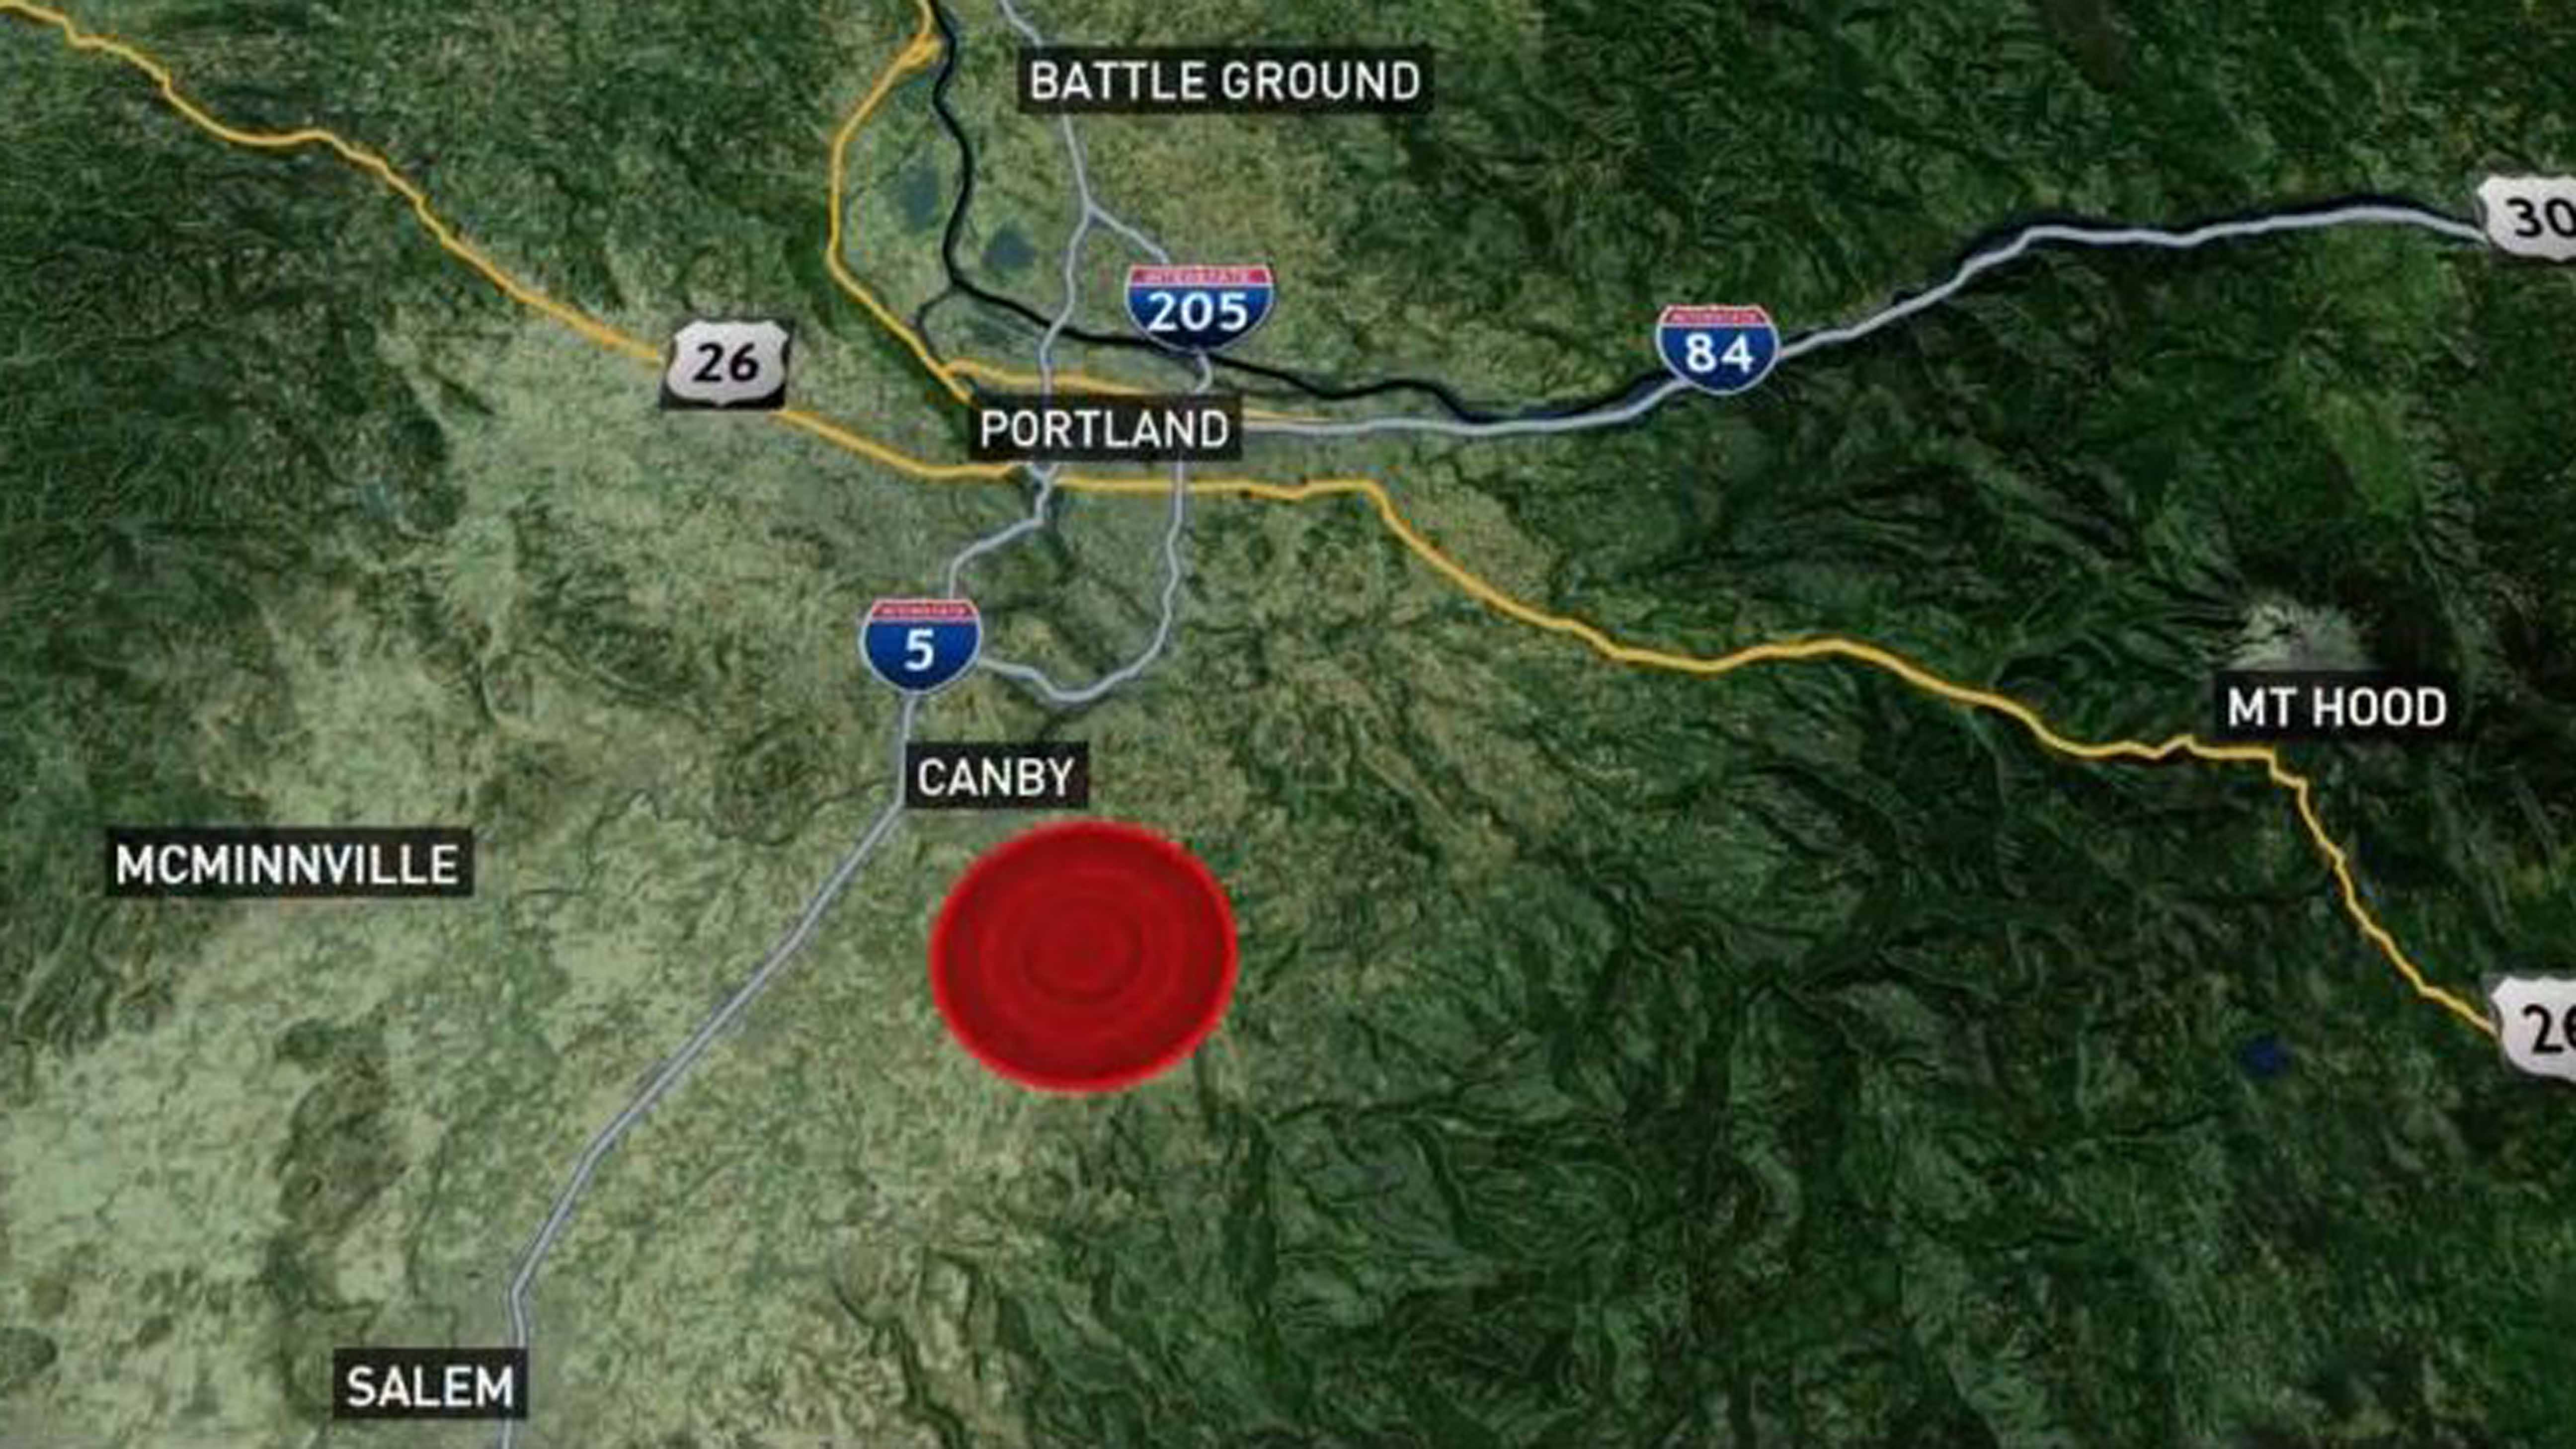 kgw.com | 4.0 earthquake near Molalla felt across region5184 x 2916